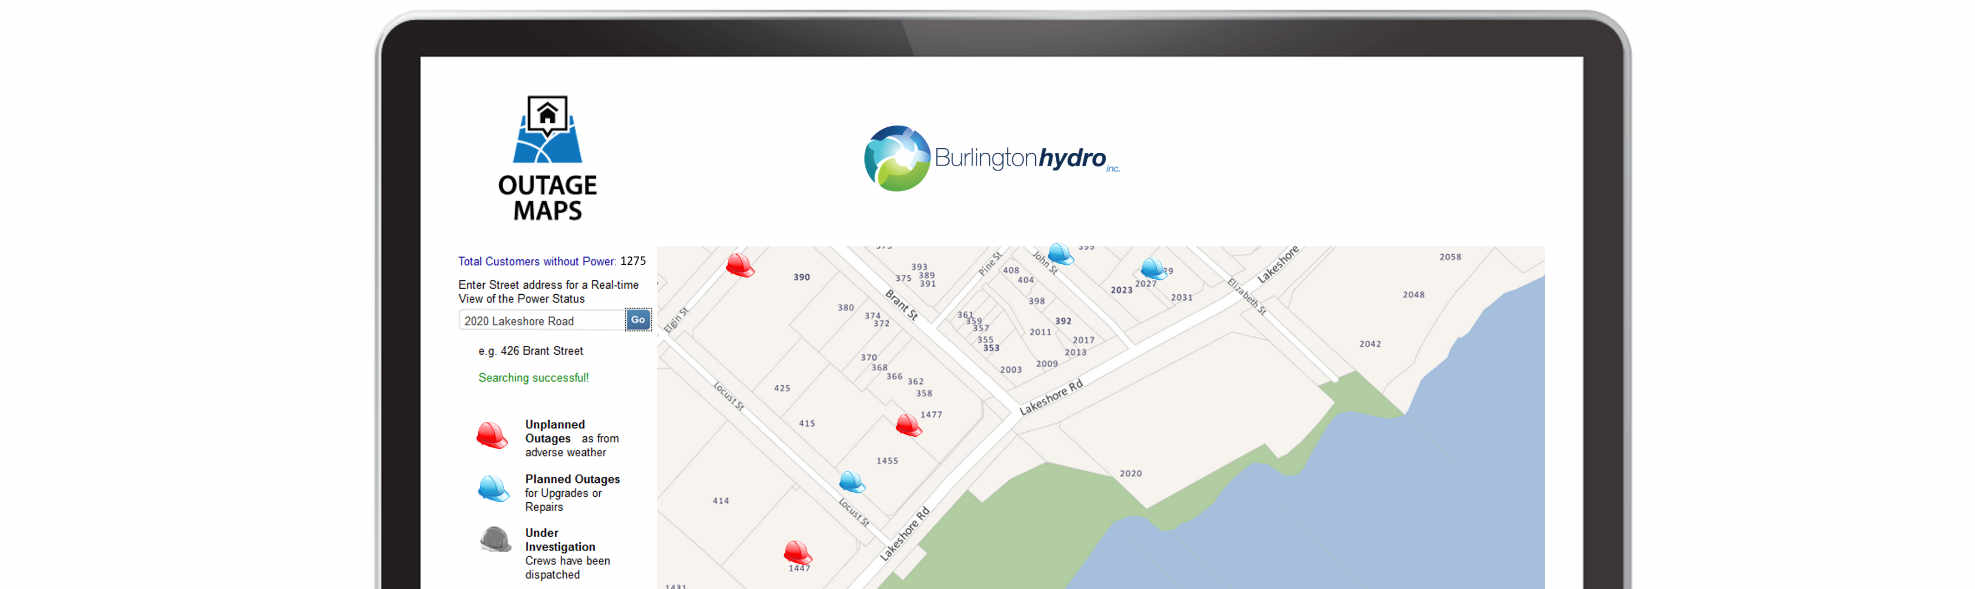 Sceenshot of Burlington Hydro Outage Maps